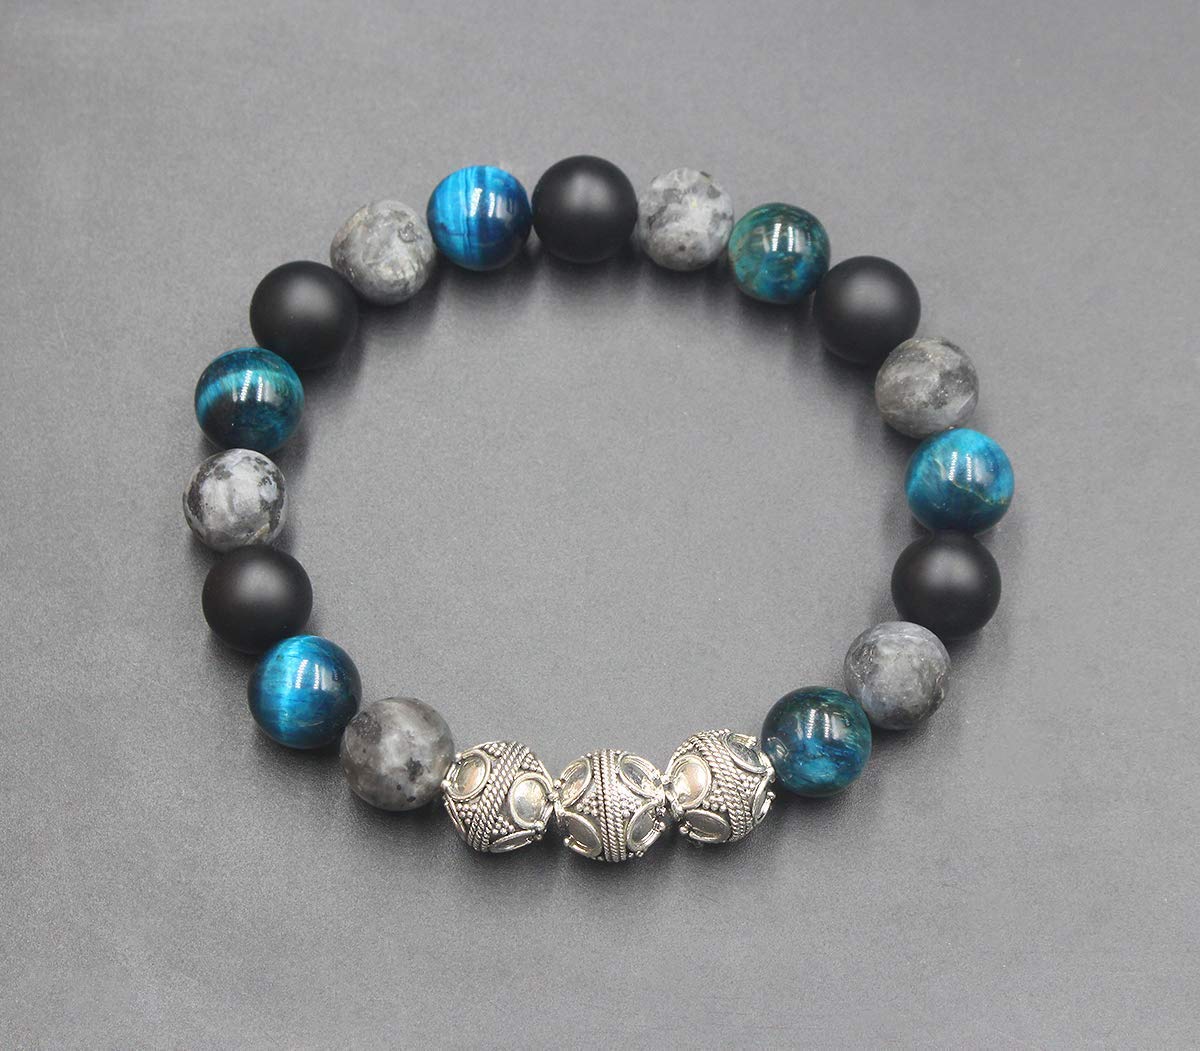 Teal Blue Tiger's Eye, Black Onyx, and Larvikite Bracelet, Mixed Stone and Sterling Silver Bali Beads Bracelet, Men's Designer Bracelet